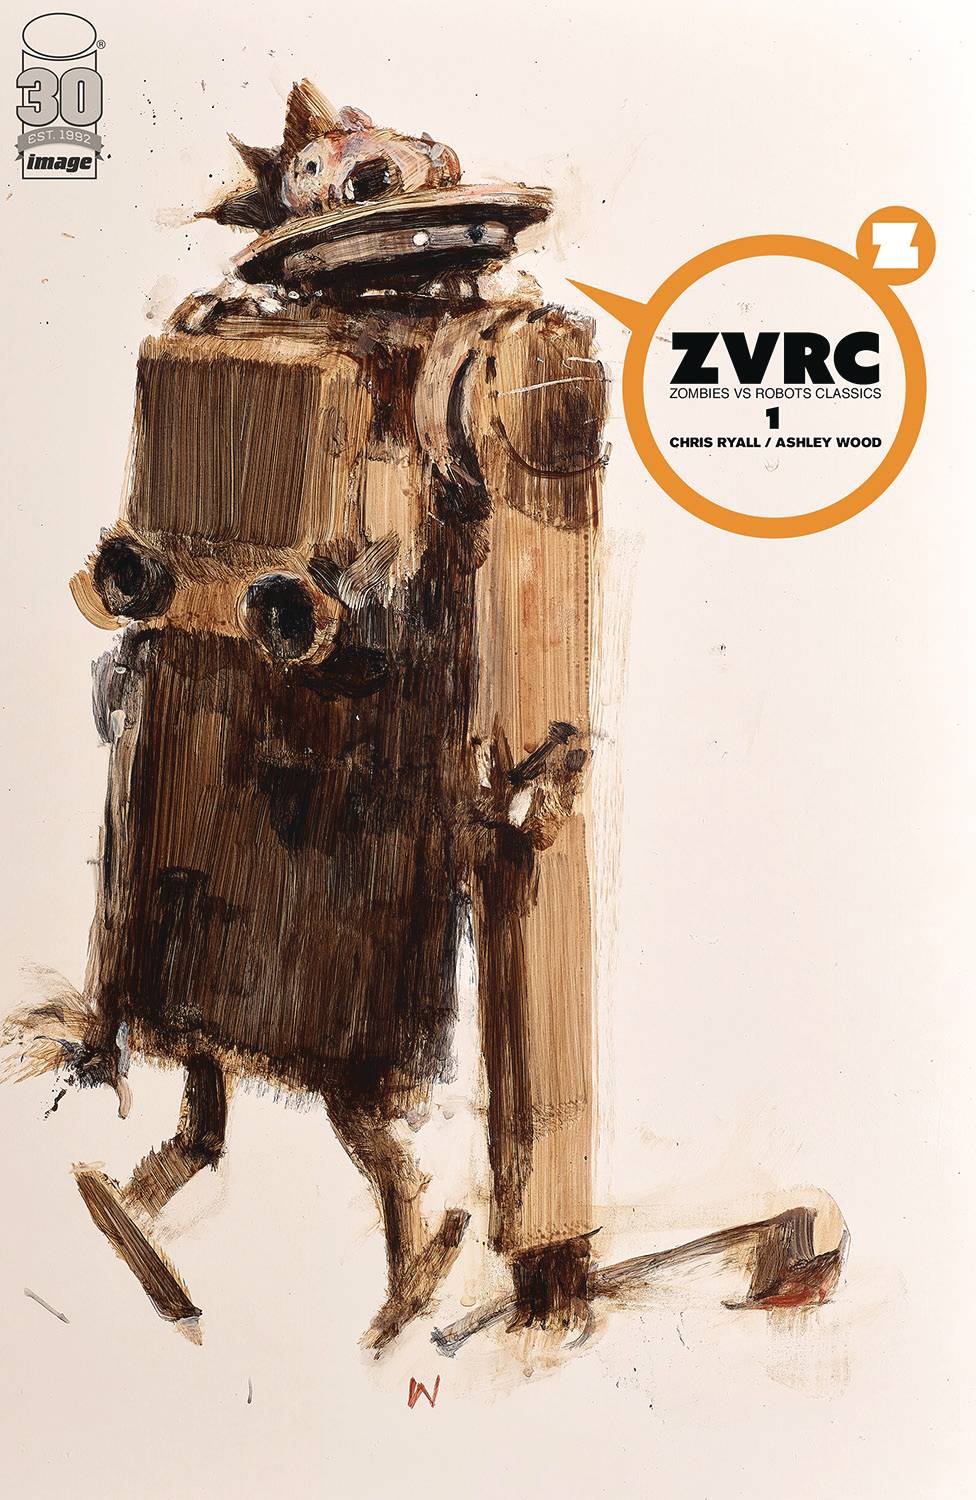 ZVRC ZOMBIES VS ROBOTS CLASSIC #1 (OF 4) CVR A WOOD (MR) - Third Eye